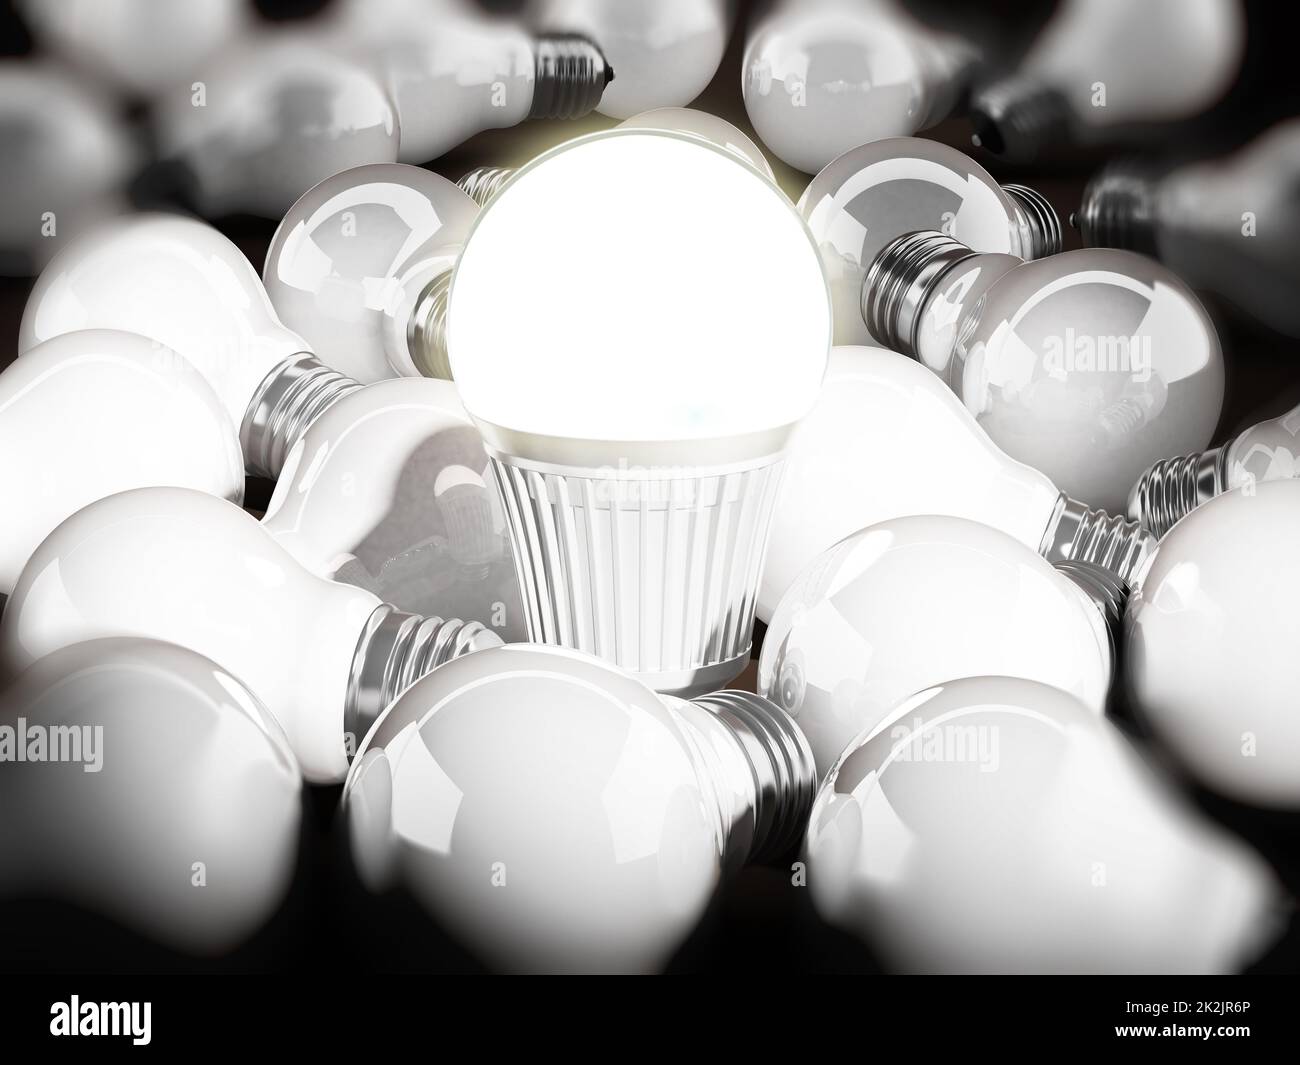 Energy efficient light bulb among standard light bulbs. 3d illustration Stock Photo